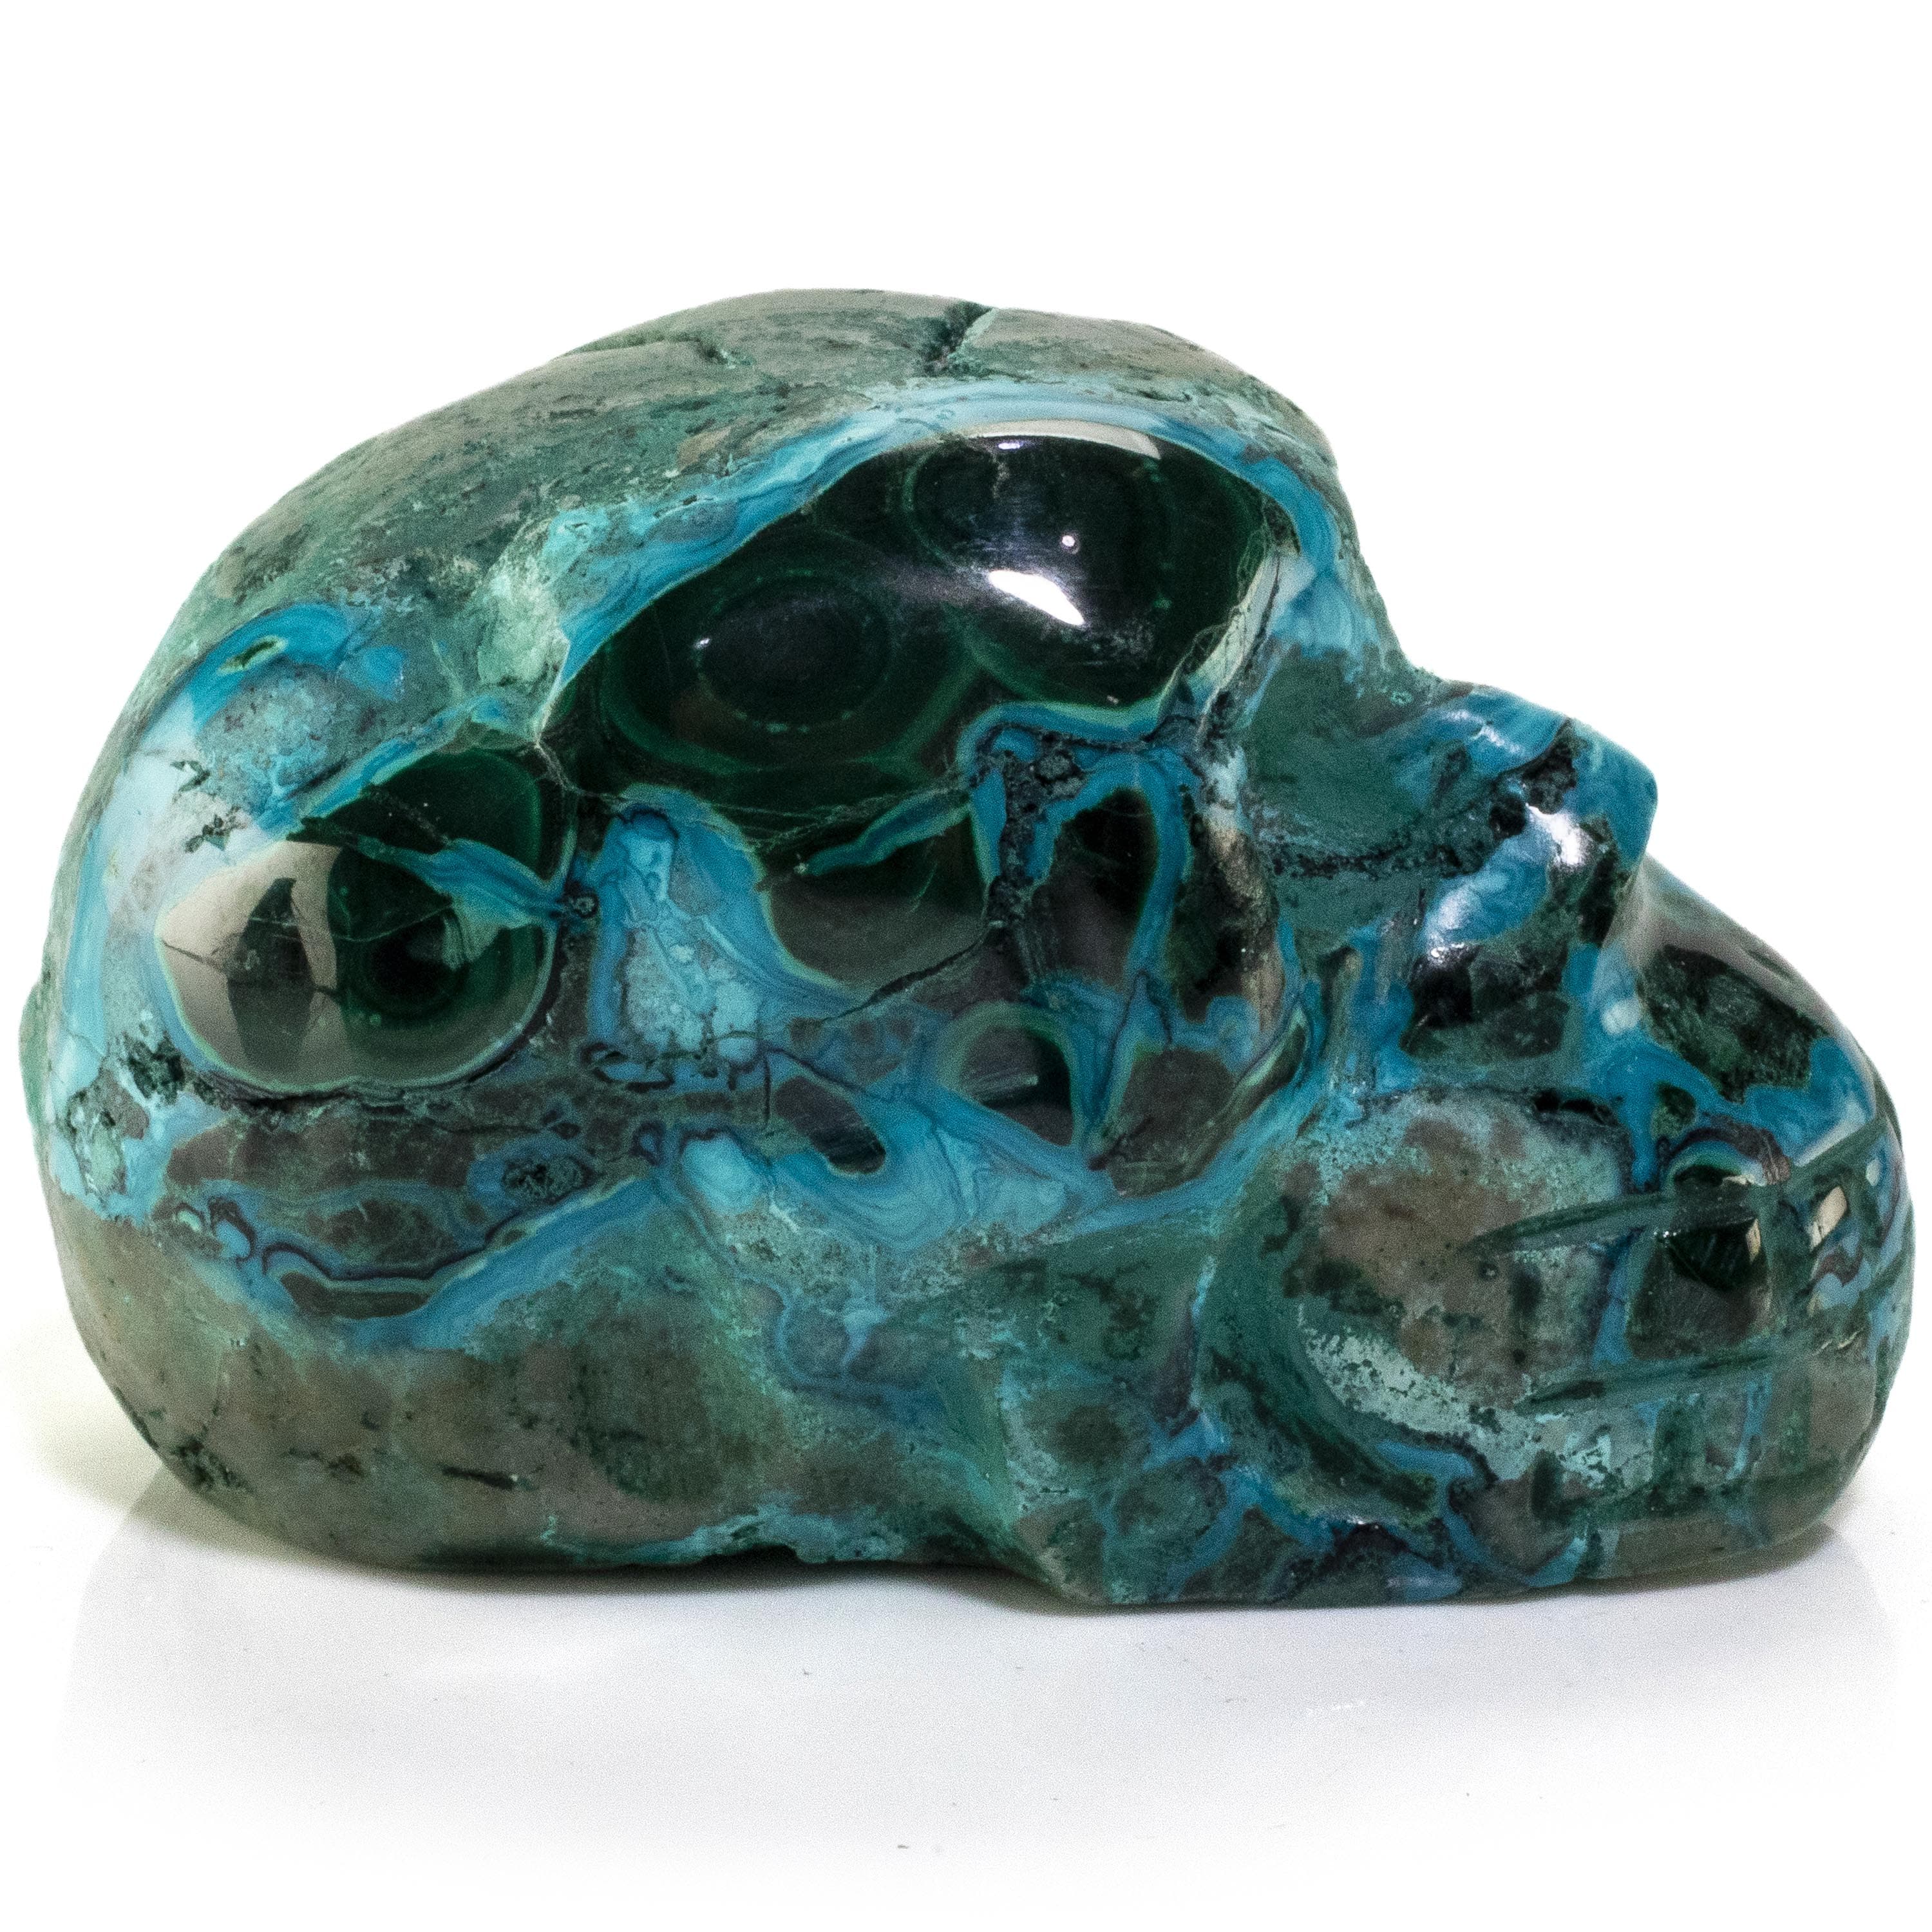 Kalifano Malachite Chrysocolla Skull Carving 2.5" / 118g SK500-CRY.002